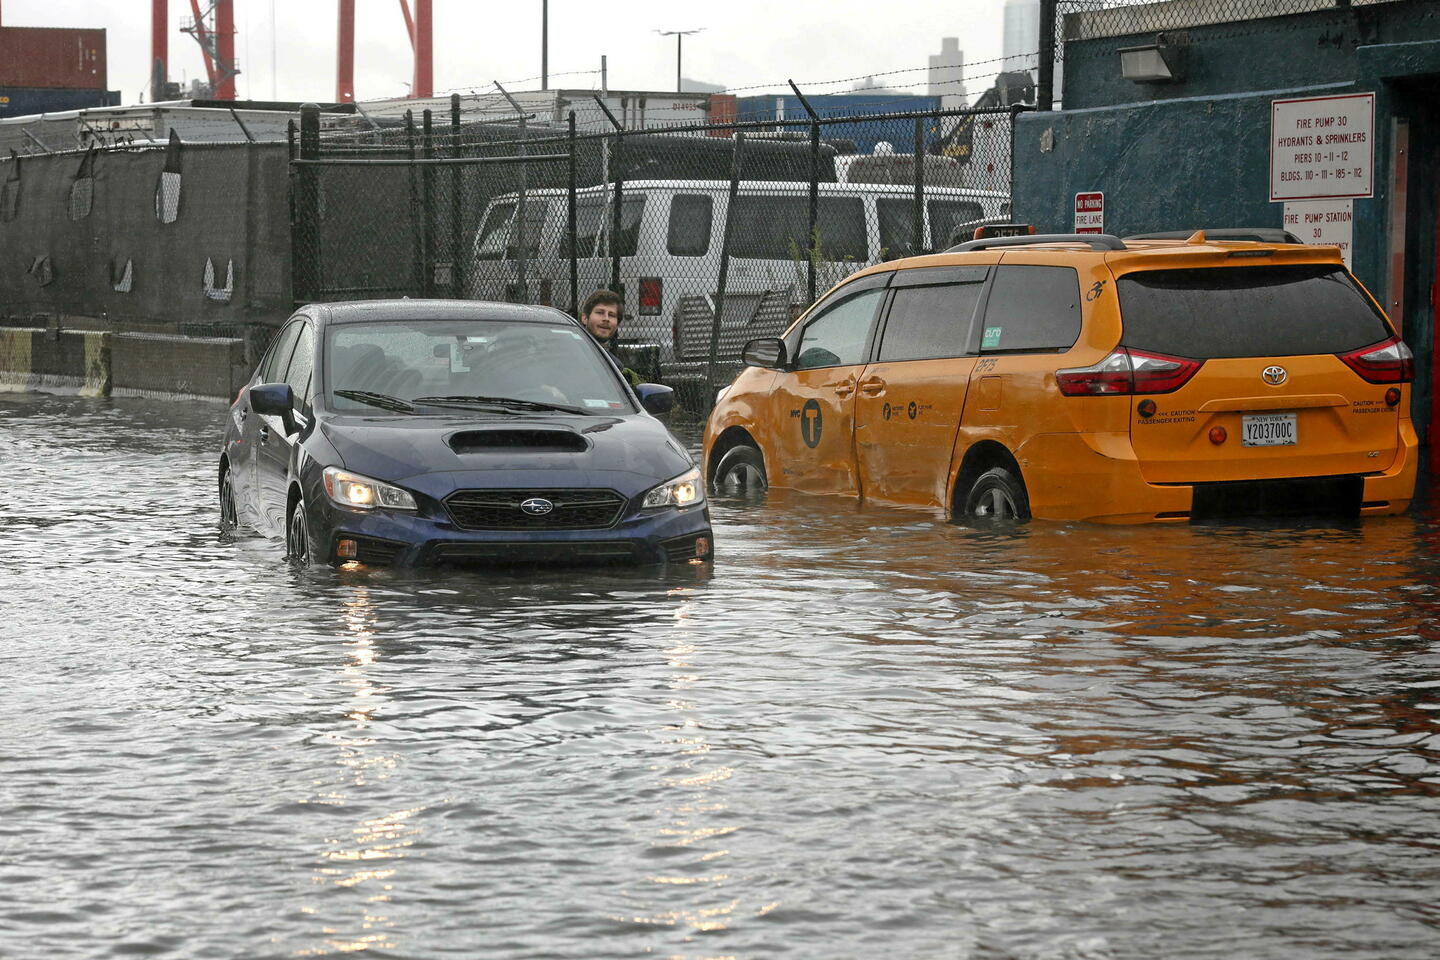 New York : les images impressionnantes des inondations